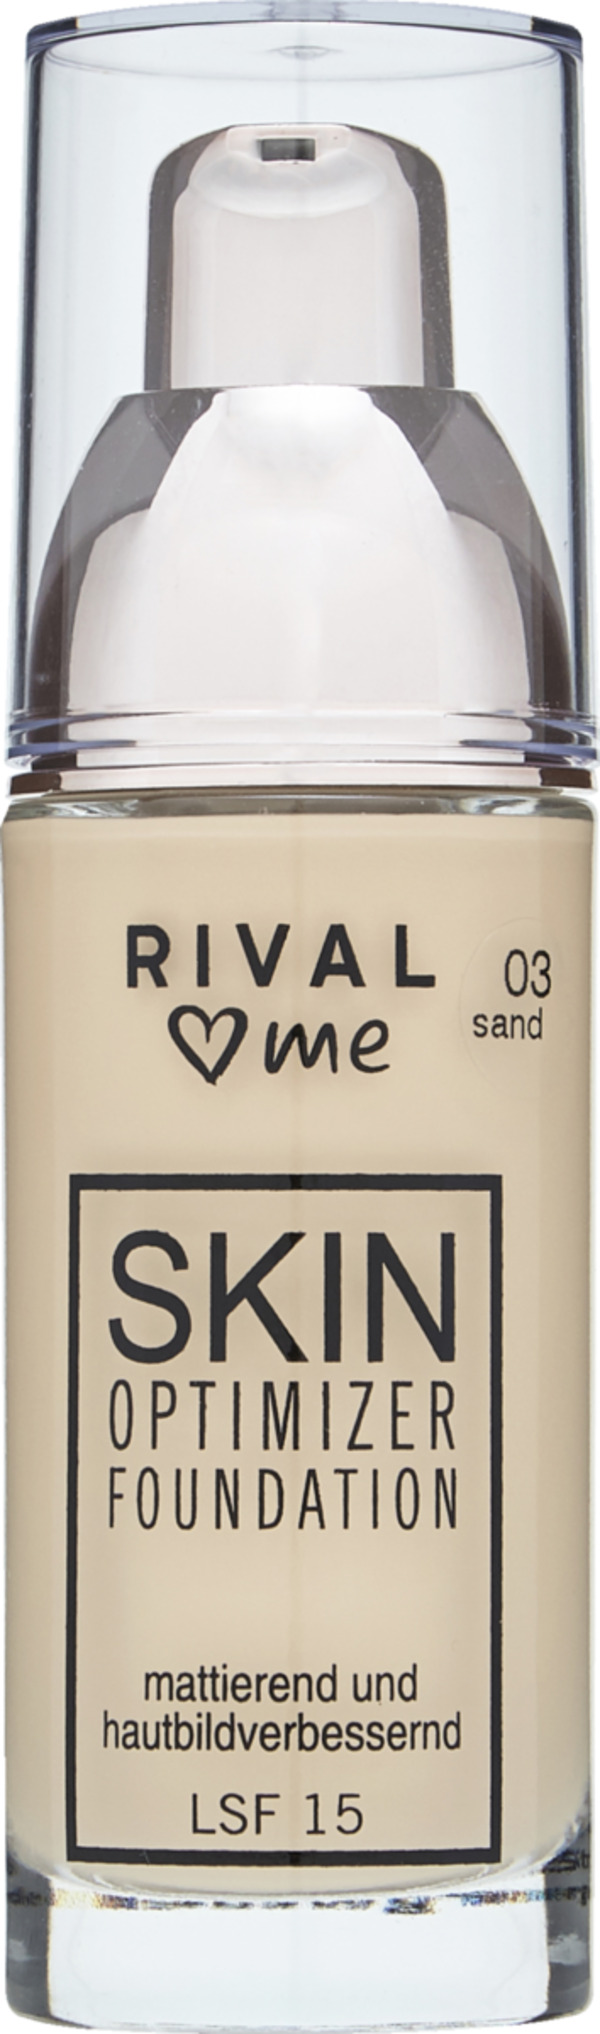 Bild 1 von RIVAL loves me Skin Optimizer Foundation 03 sand